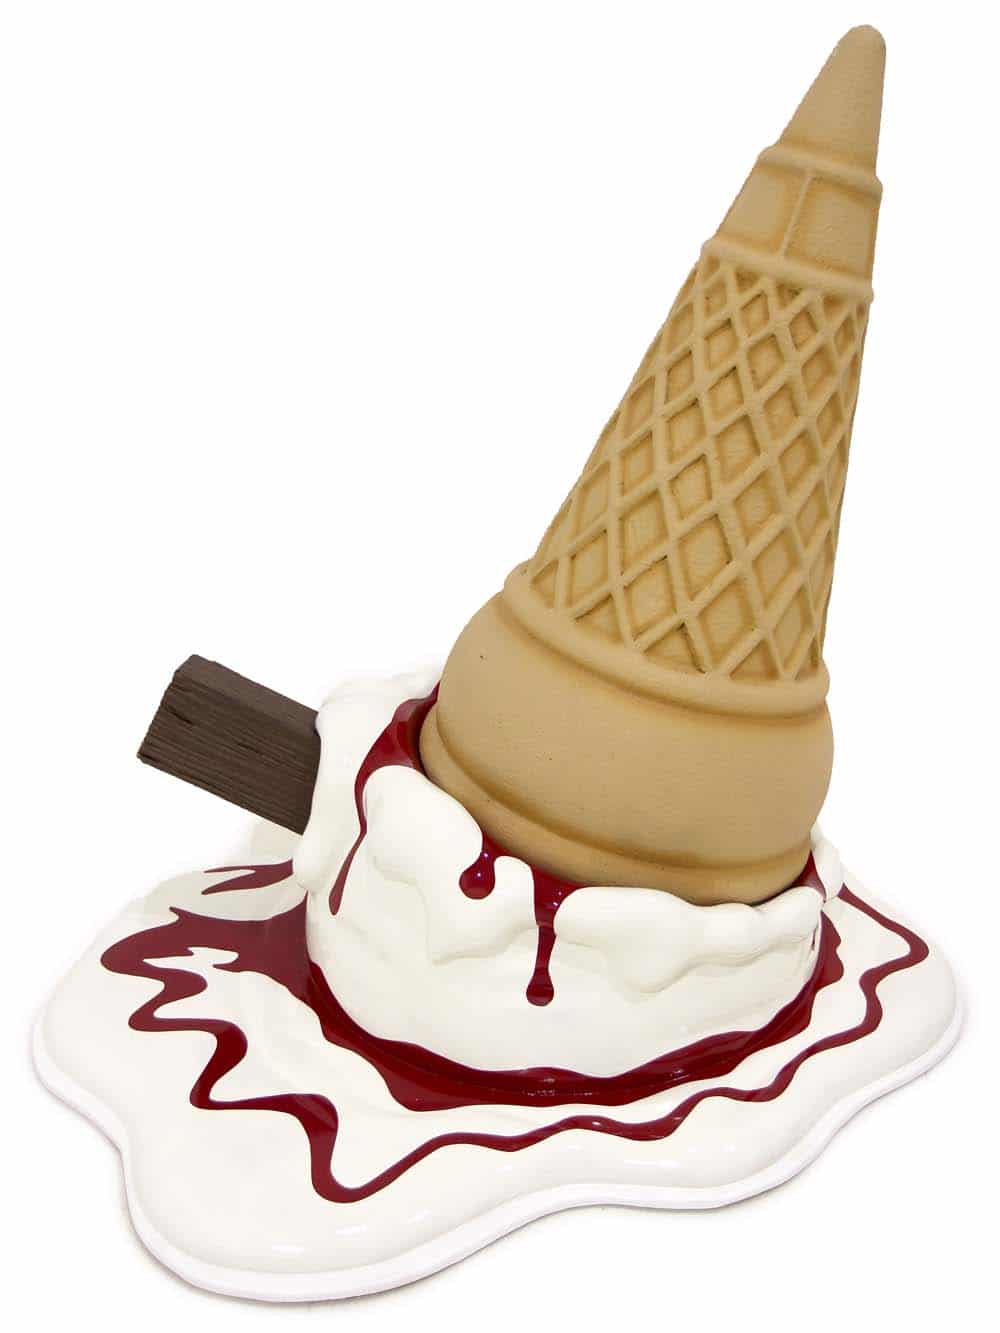 Large dropped Ice Cream - Vanilla & Raspberry